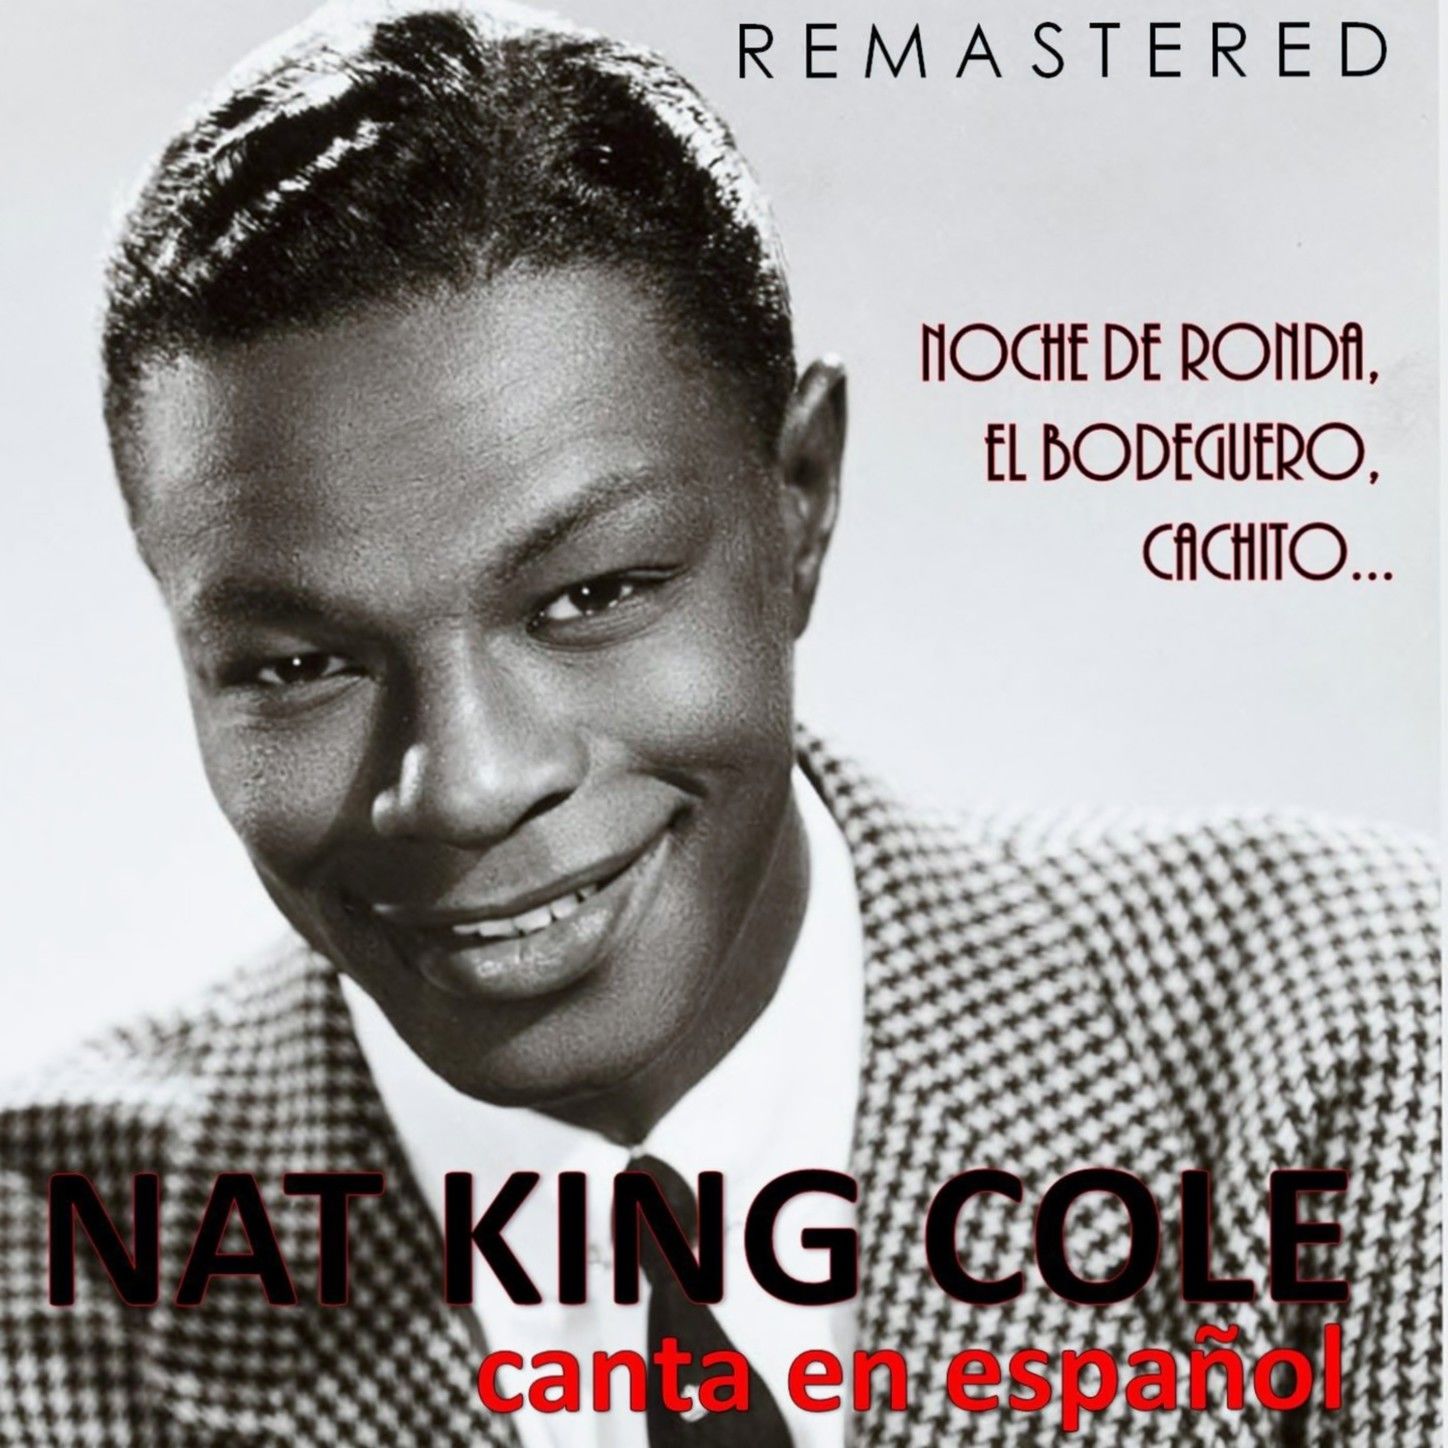 Nat King Cole Canta en Espa ol Remastered